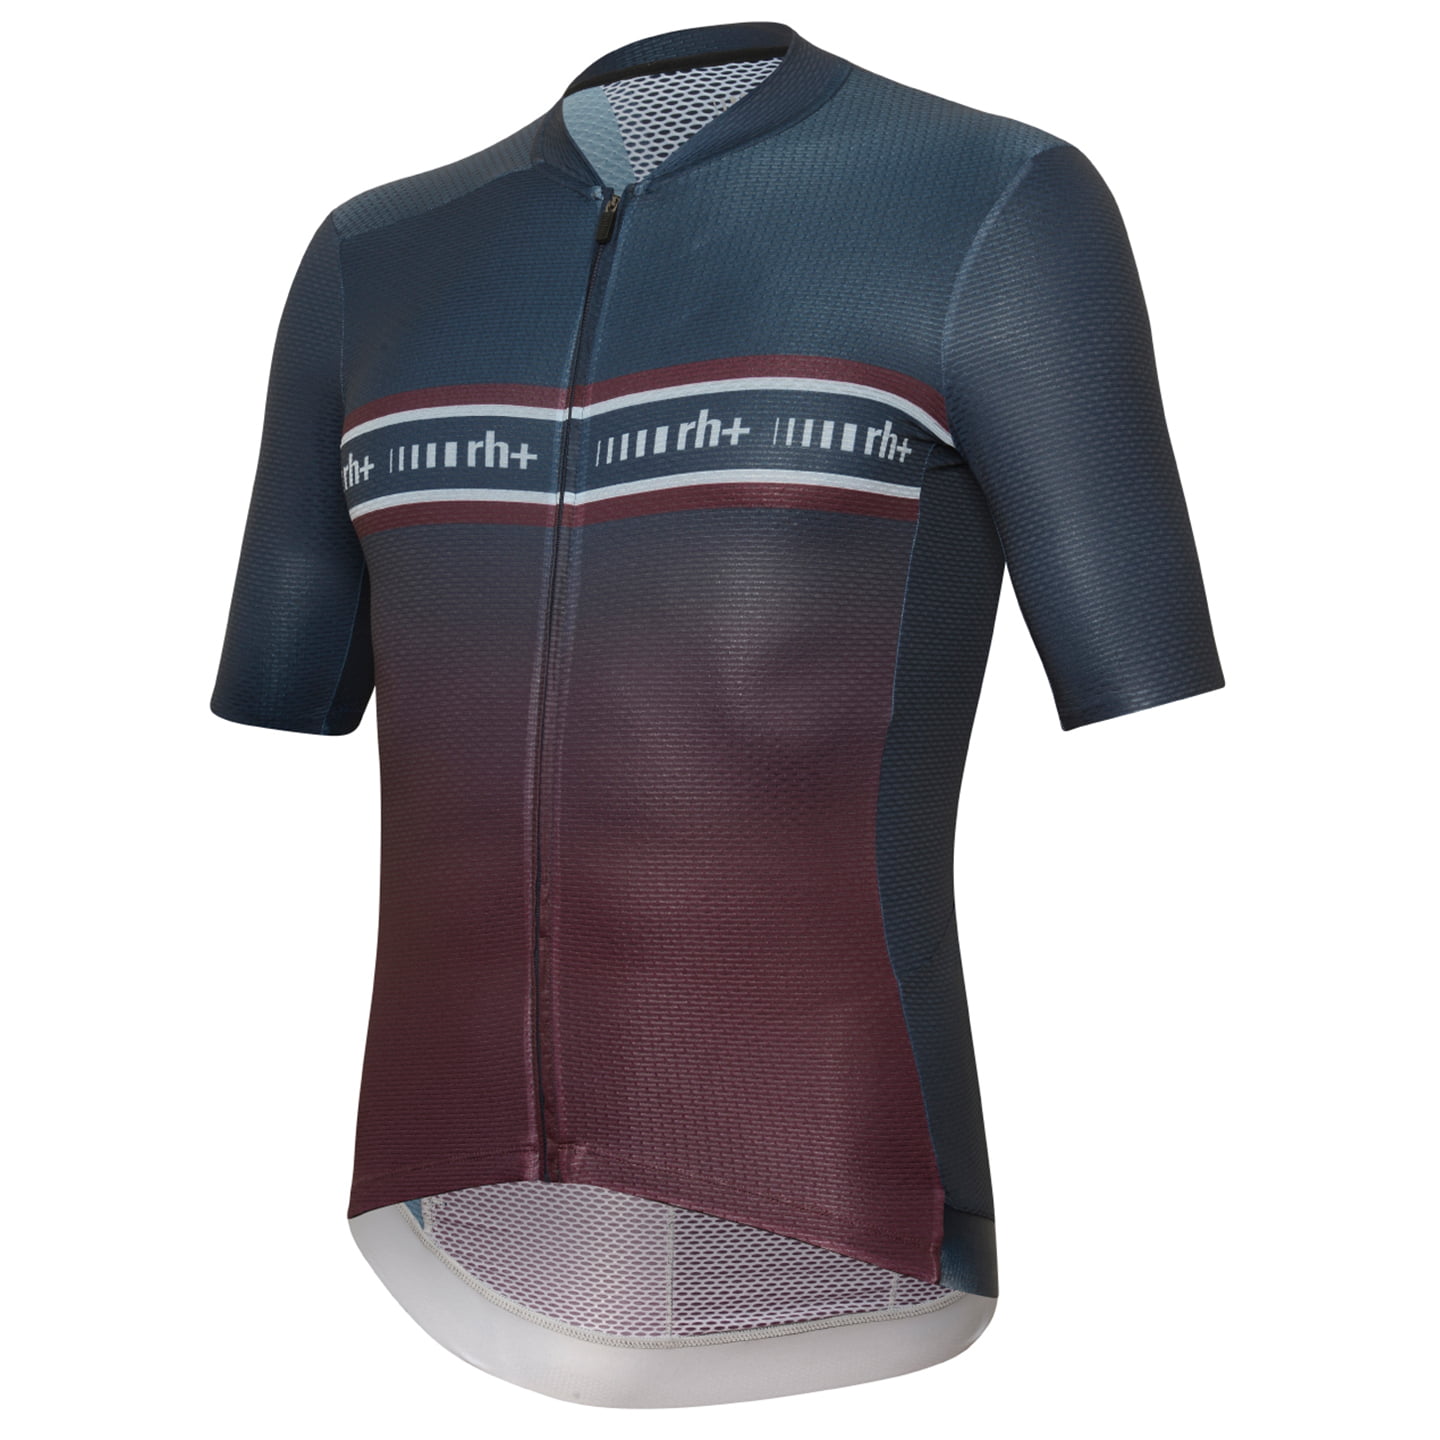 RH+ Light Climber Short Sleeve Jersey Short Sleeve Jersey, for men, size L, Cycling jersey, Cycling clothing